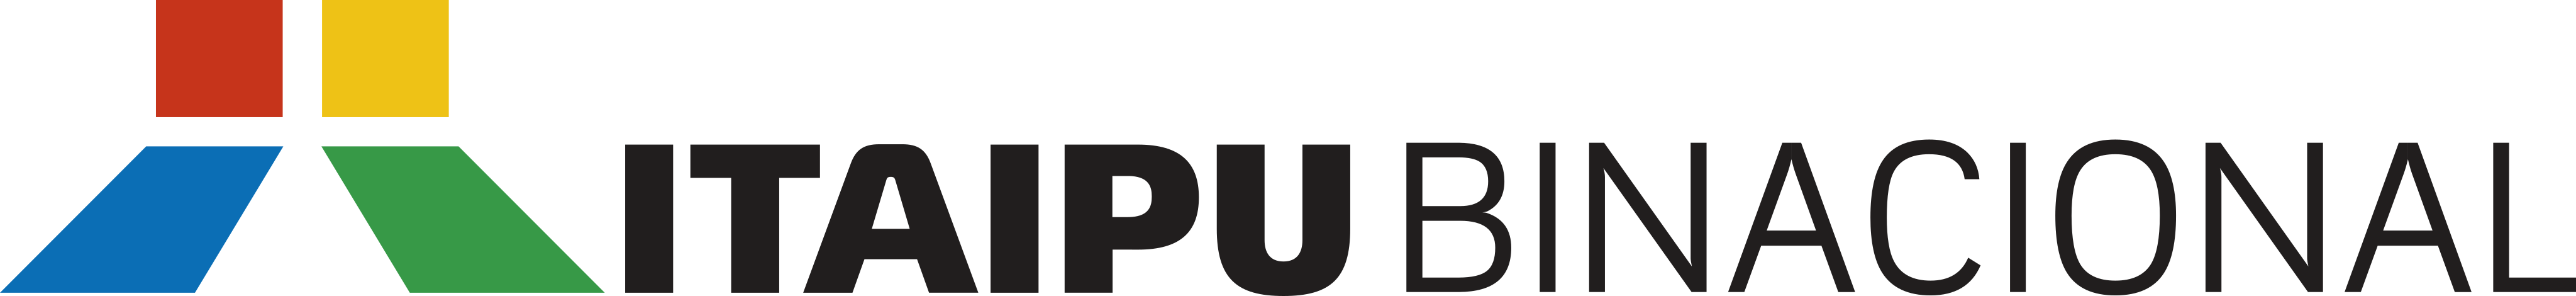 itaipu logo 2 - Itaipu Binacional Logo